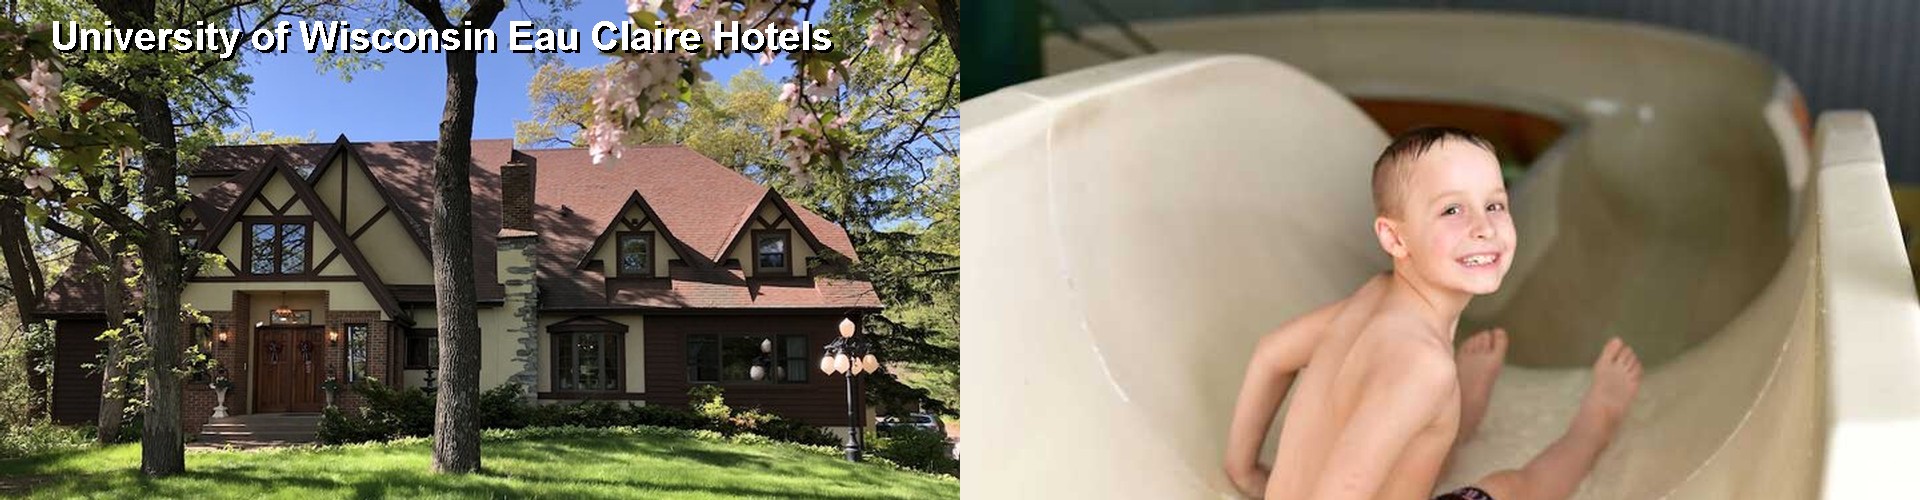 4 Best Hotels near University of Wisconsin Eau Claire